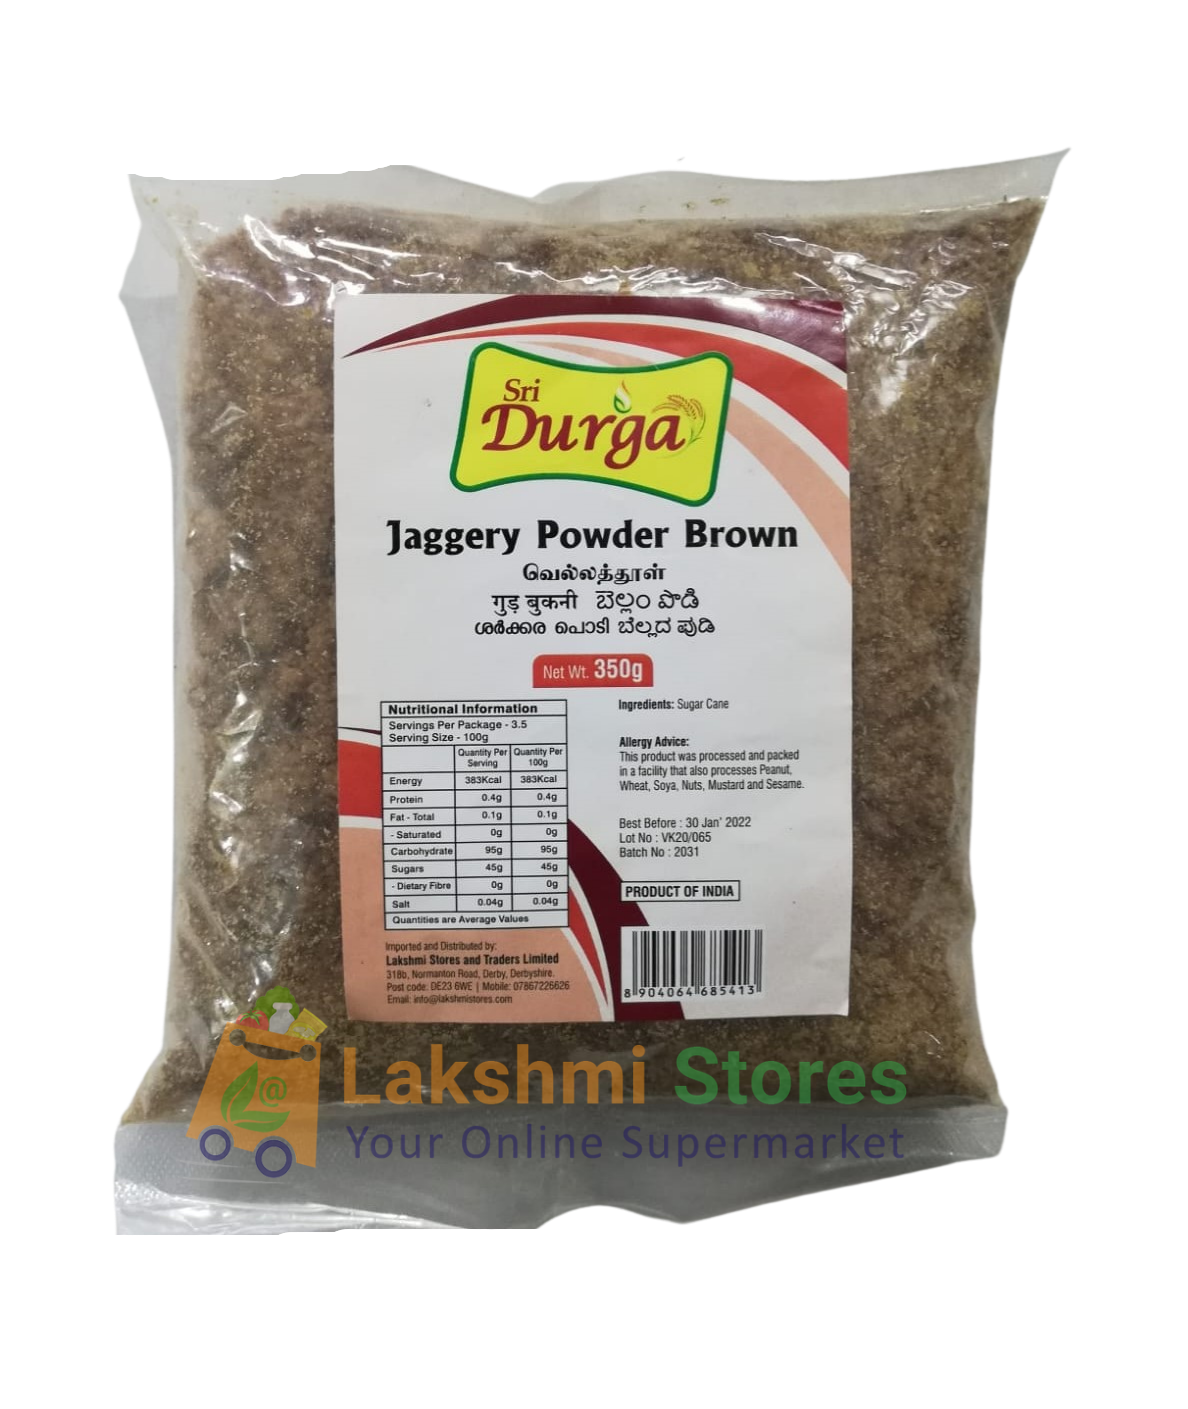 sri durga jaggery powder 350g - brown